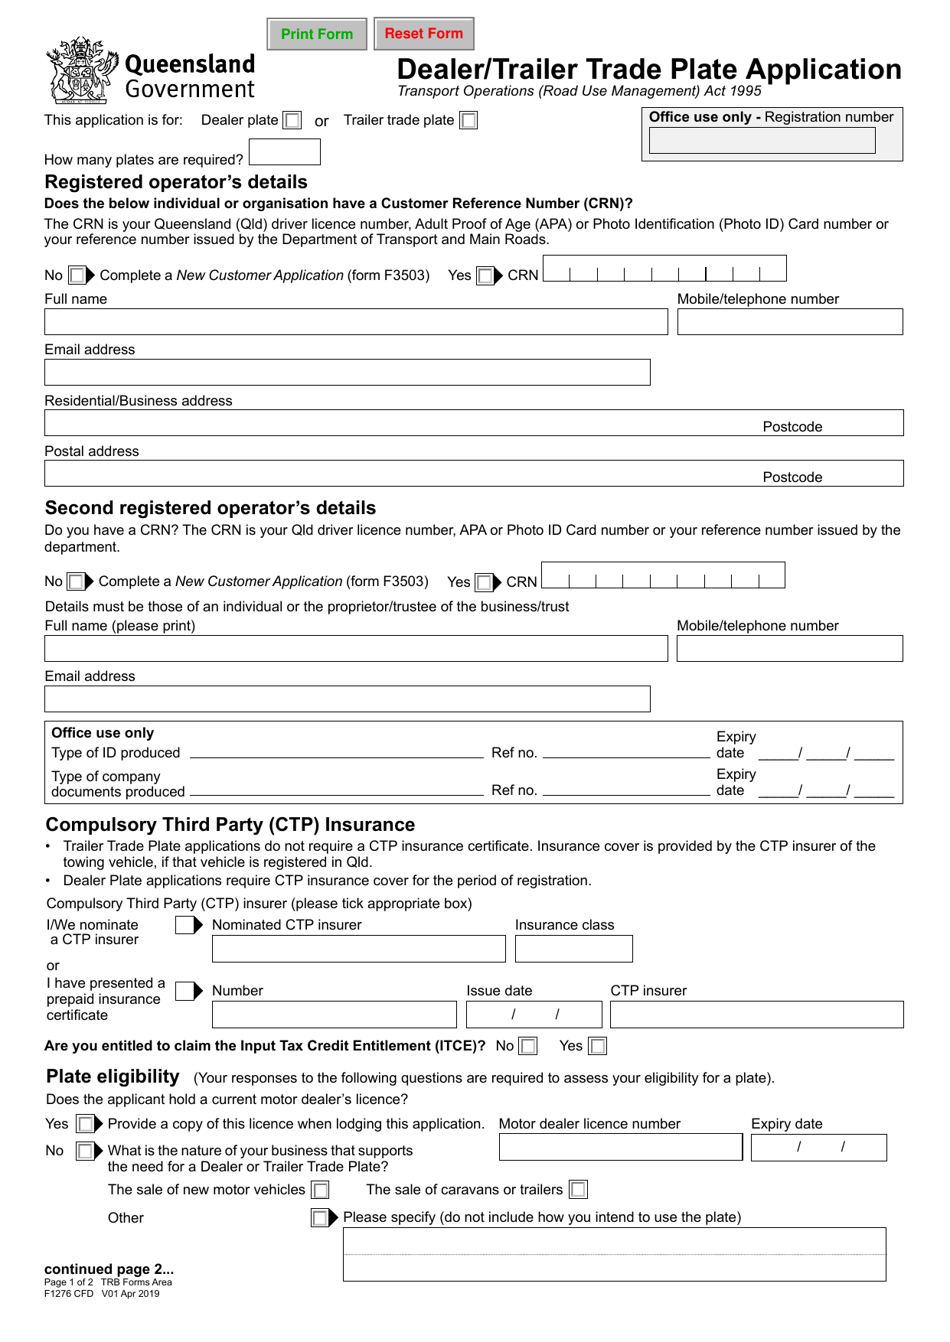 Form F1276 Dealer / Trailer Trade Plate Application - Queensland, Australia, Page 1